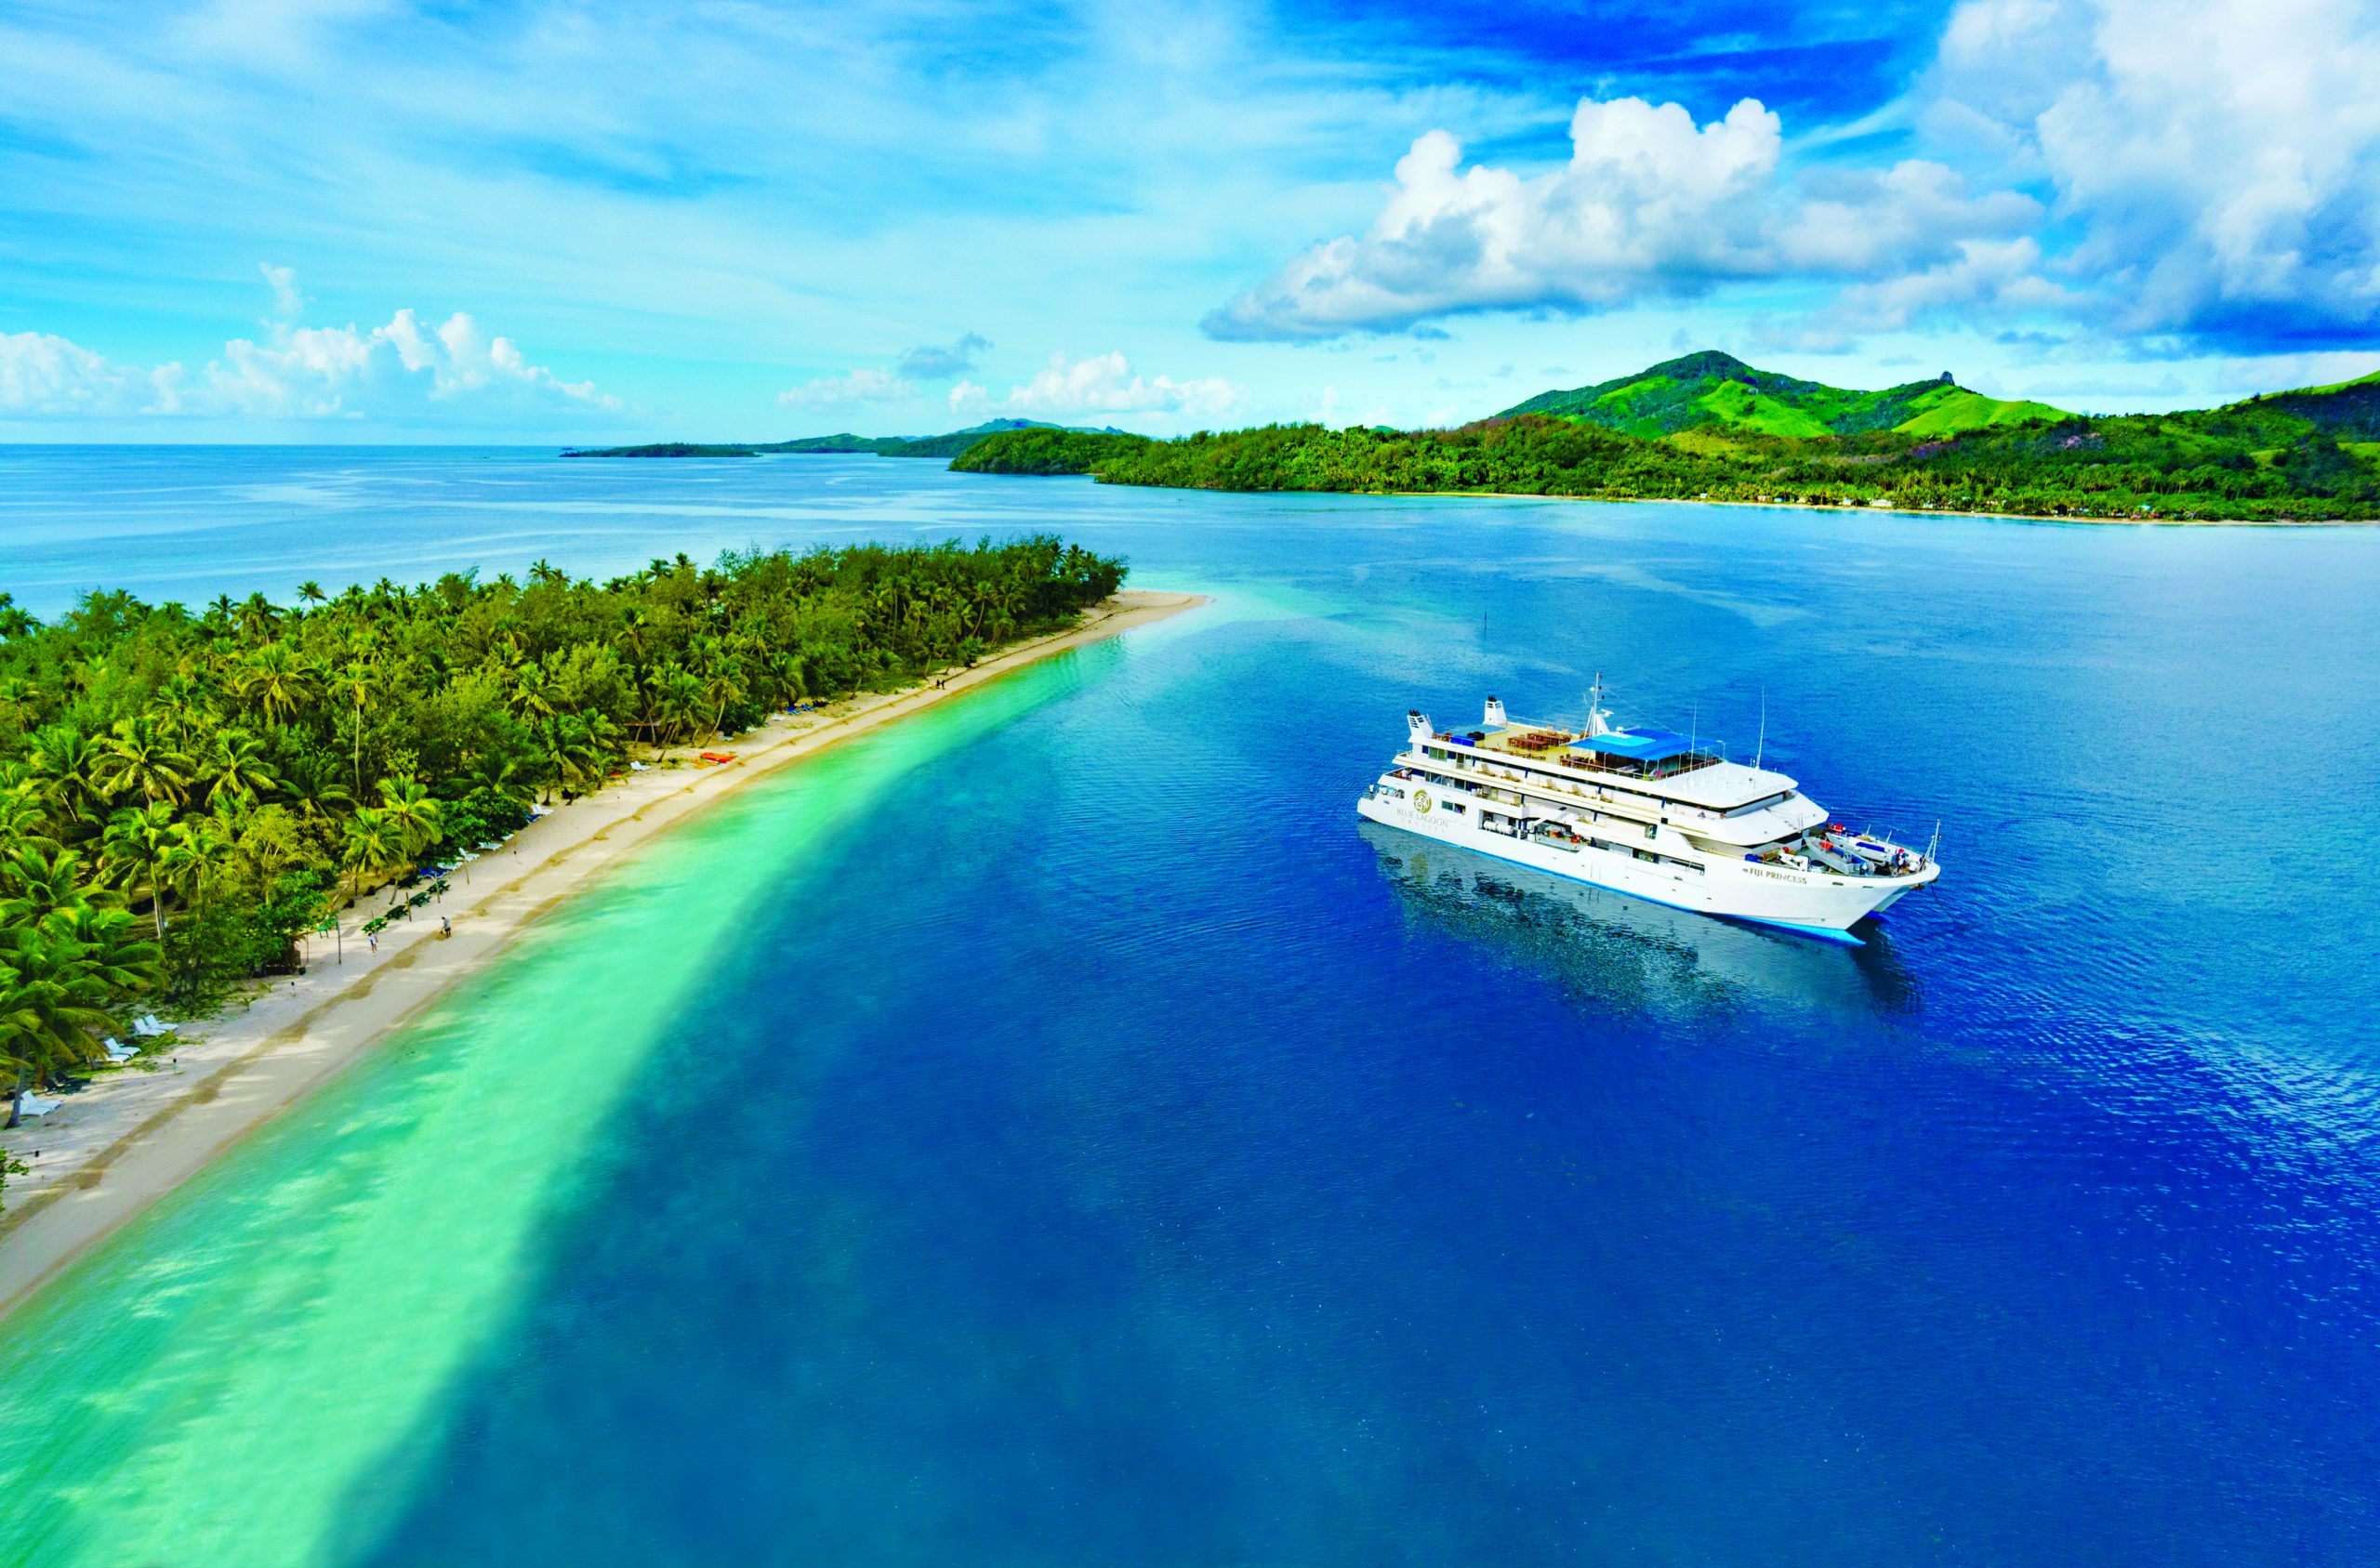 CLOSED: Win a Fiji cruise valued at $4,820!